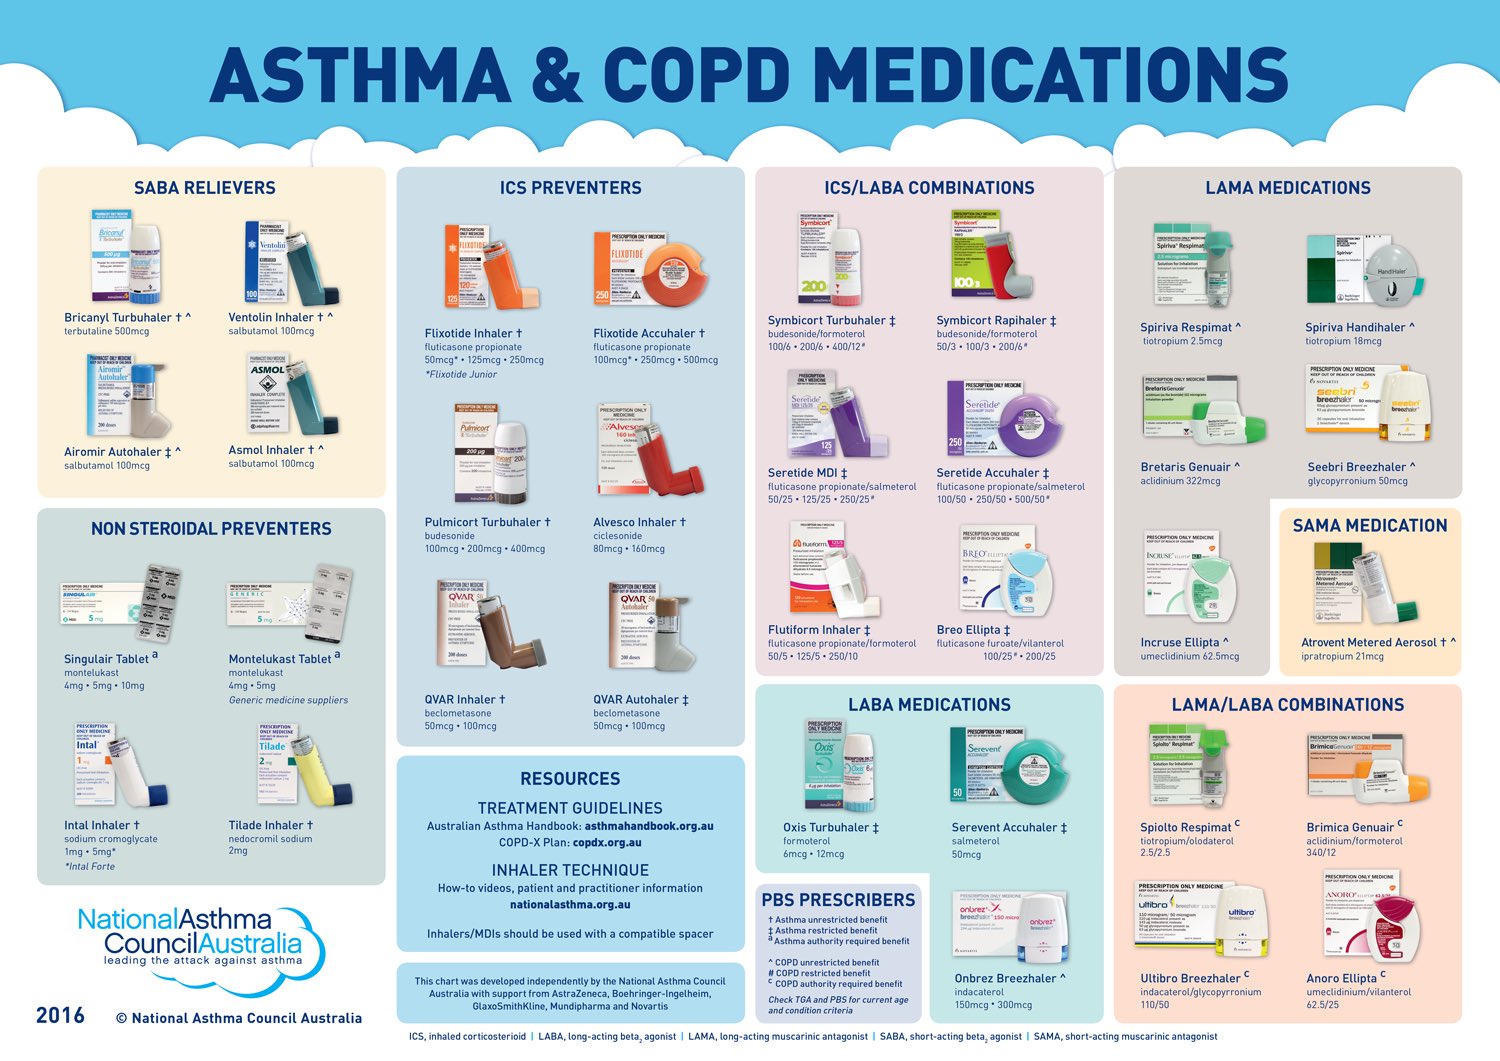 Sameera Ansari on Twitter: " Updated #asthma handbook and ...